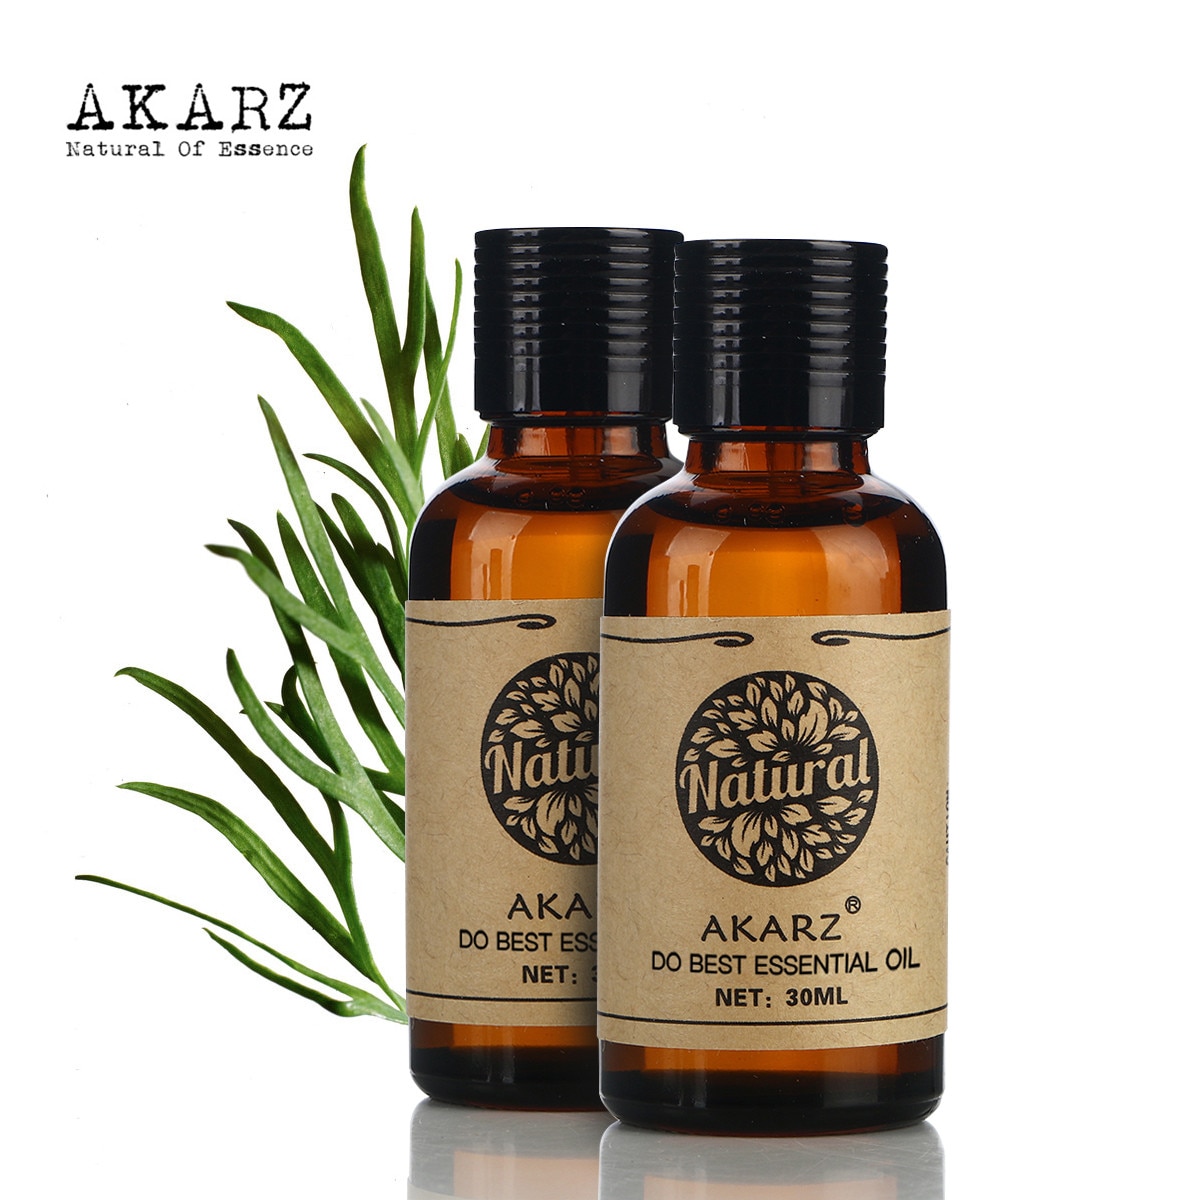 AKARZ Berühmte Marke entspannt setzt natürliche Aromatherapie Pfefferminzöl Jasminöl Körper Massageöl 30ml*2